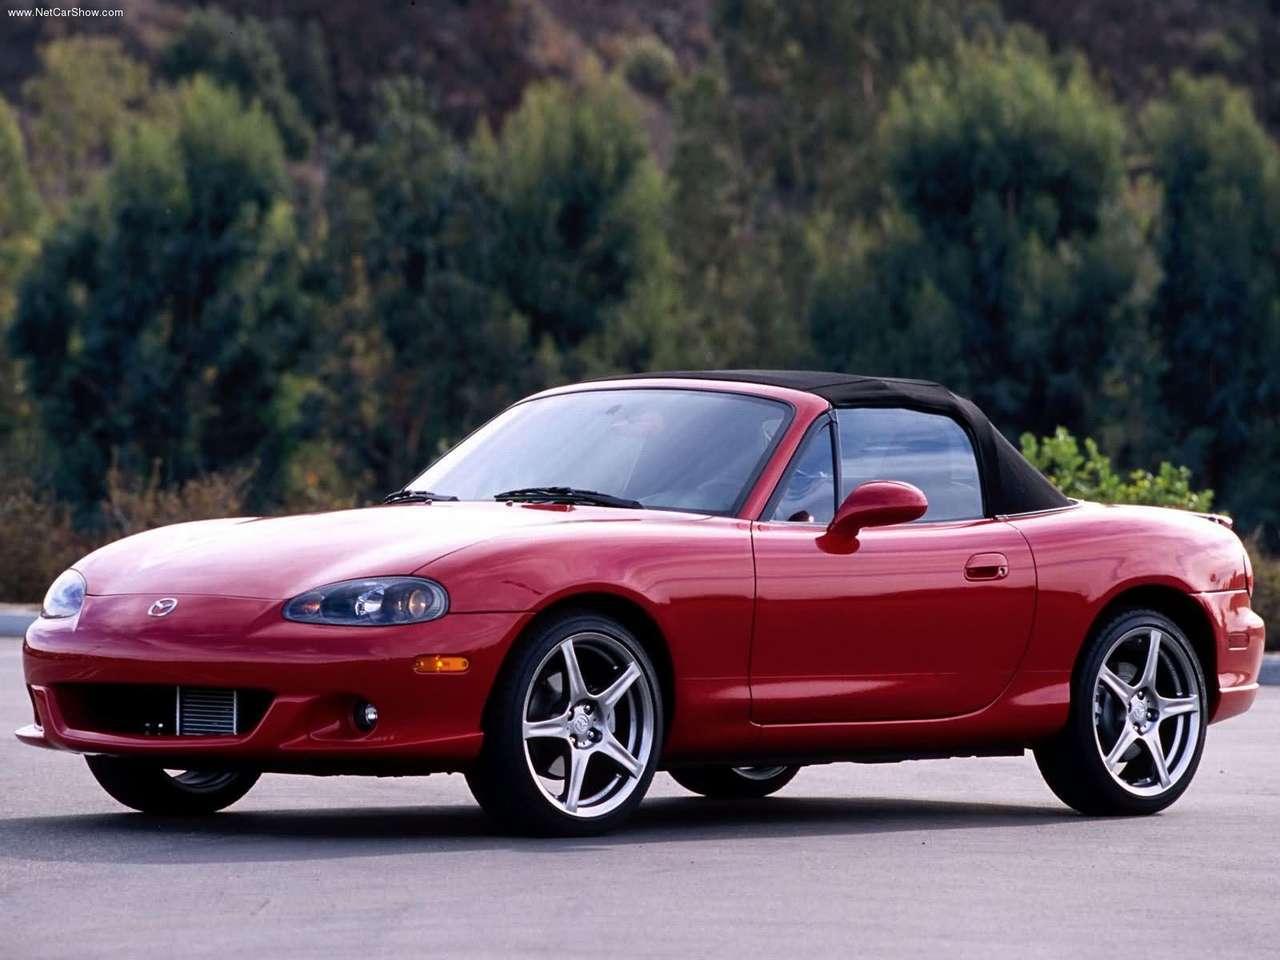 Mazda - Populaire francais d'automobiles: 2004 Mazda MazdaSpeed MX5